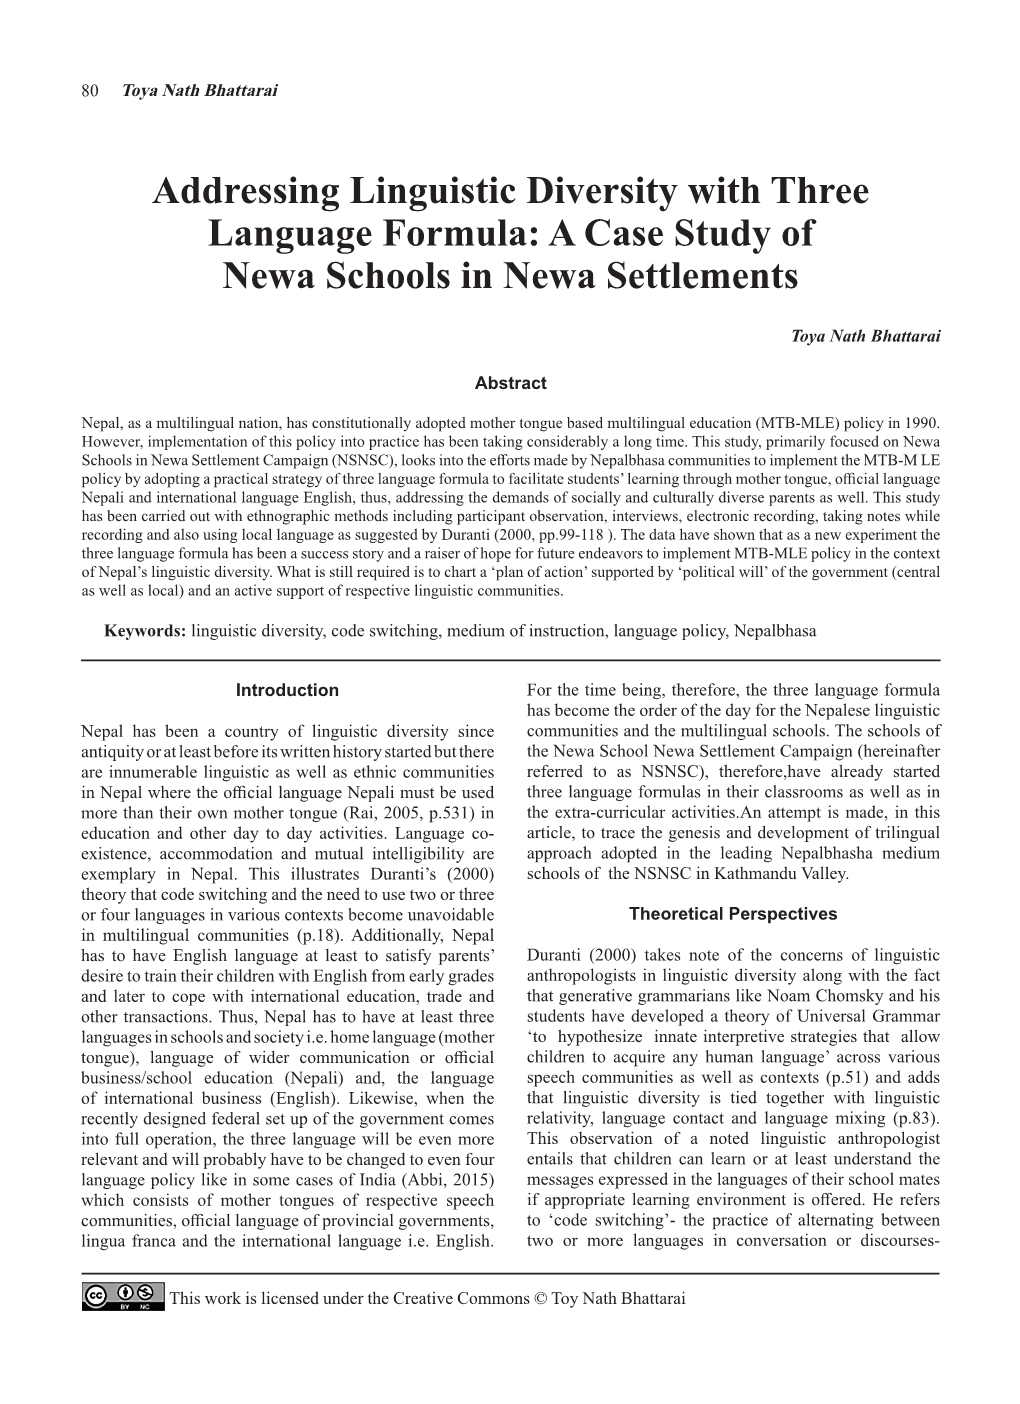 Addressing Linguistic Diversity with Three Language Formula: a Case Study of Newa Schools in Newa Settlements